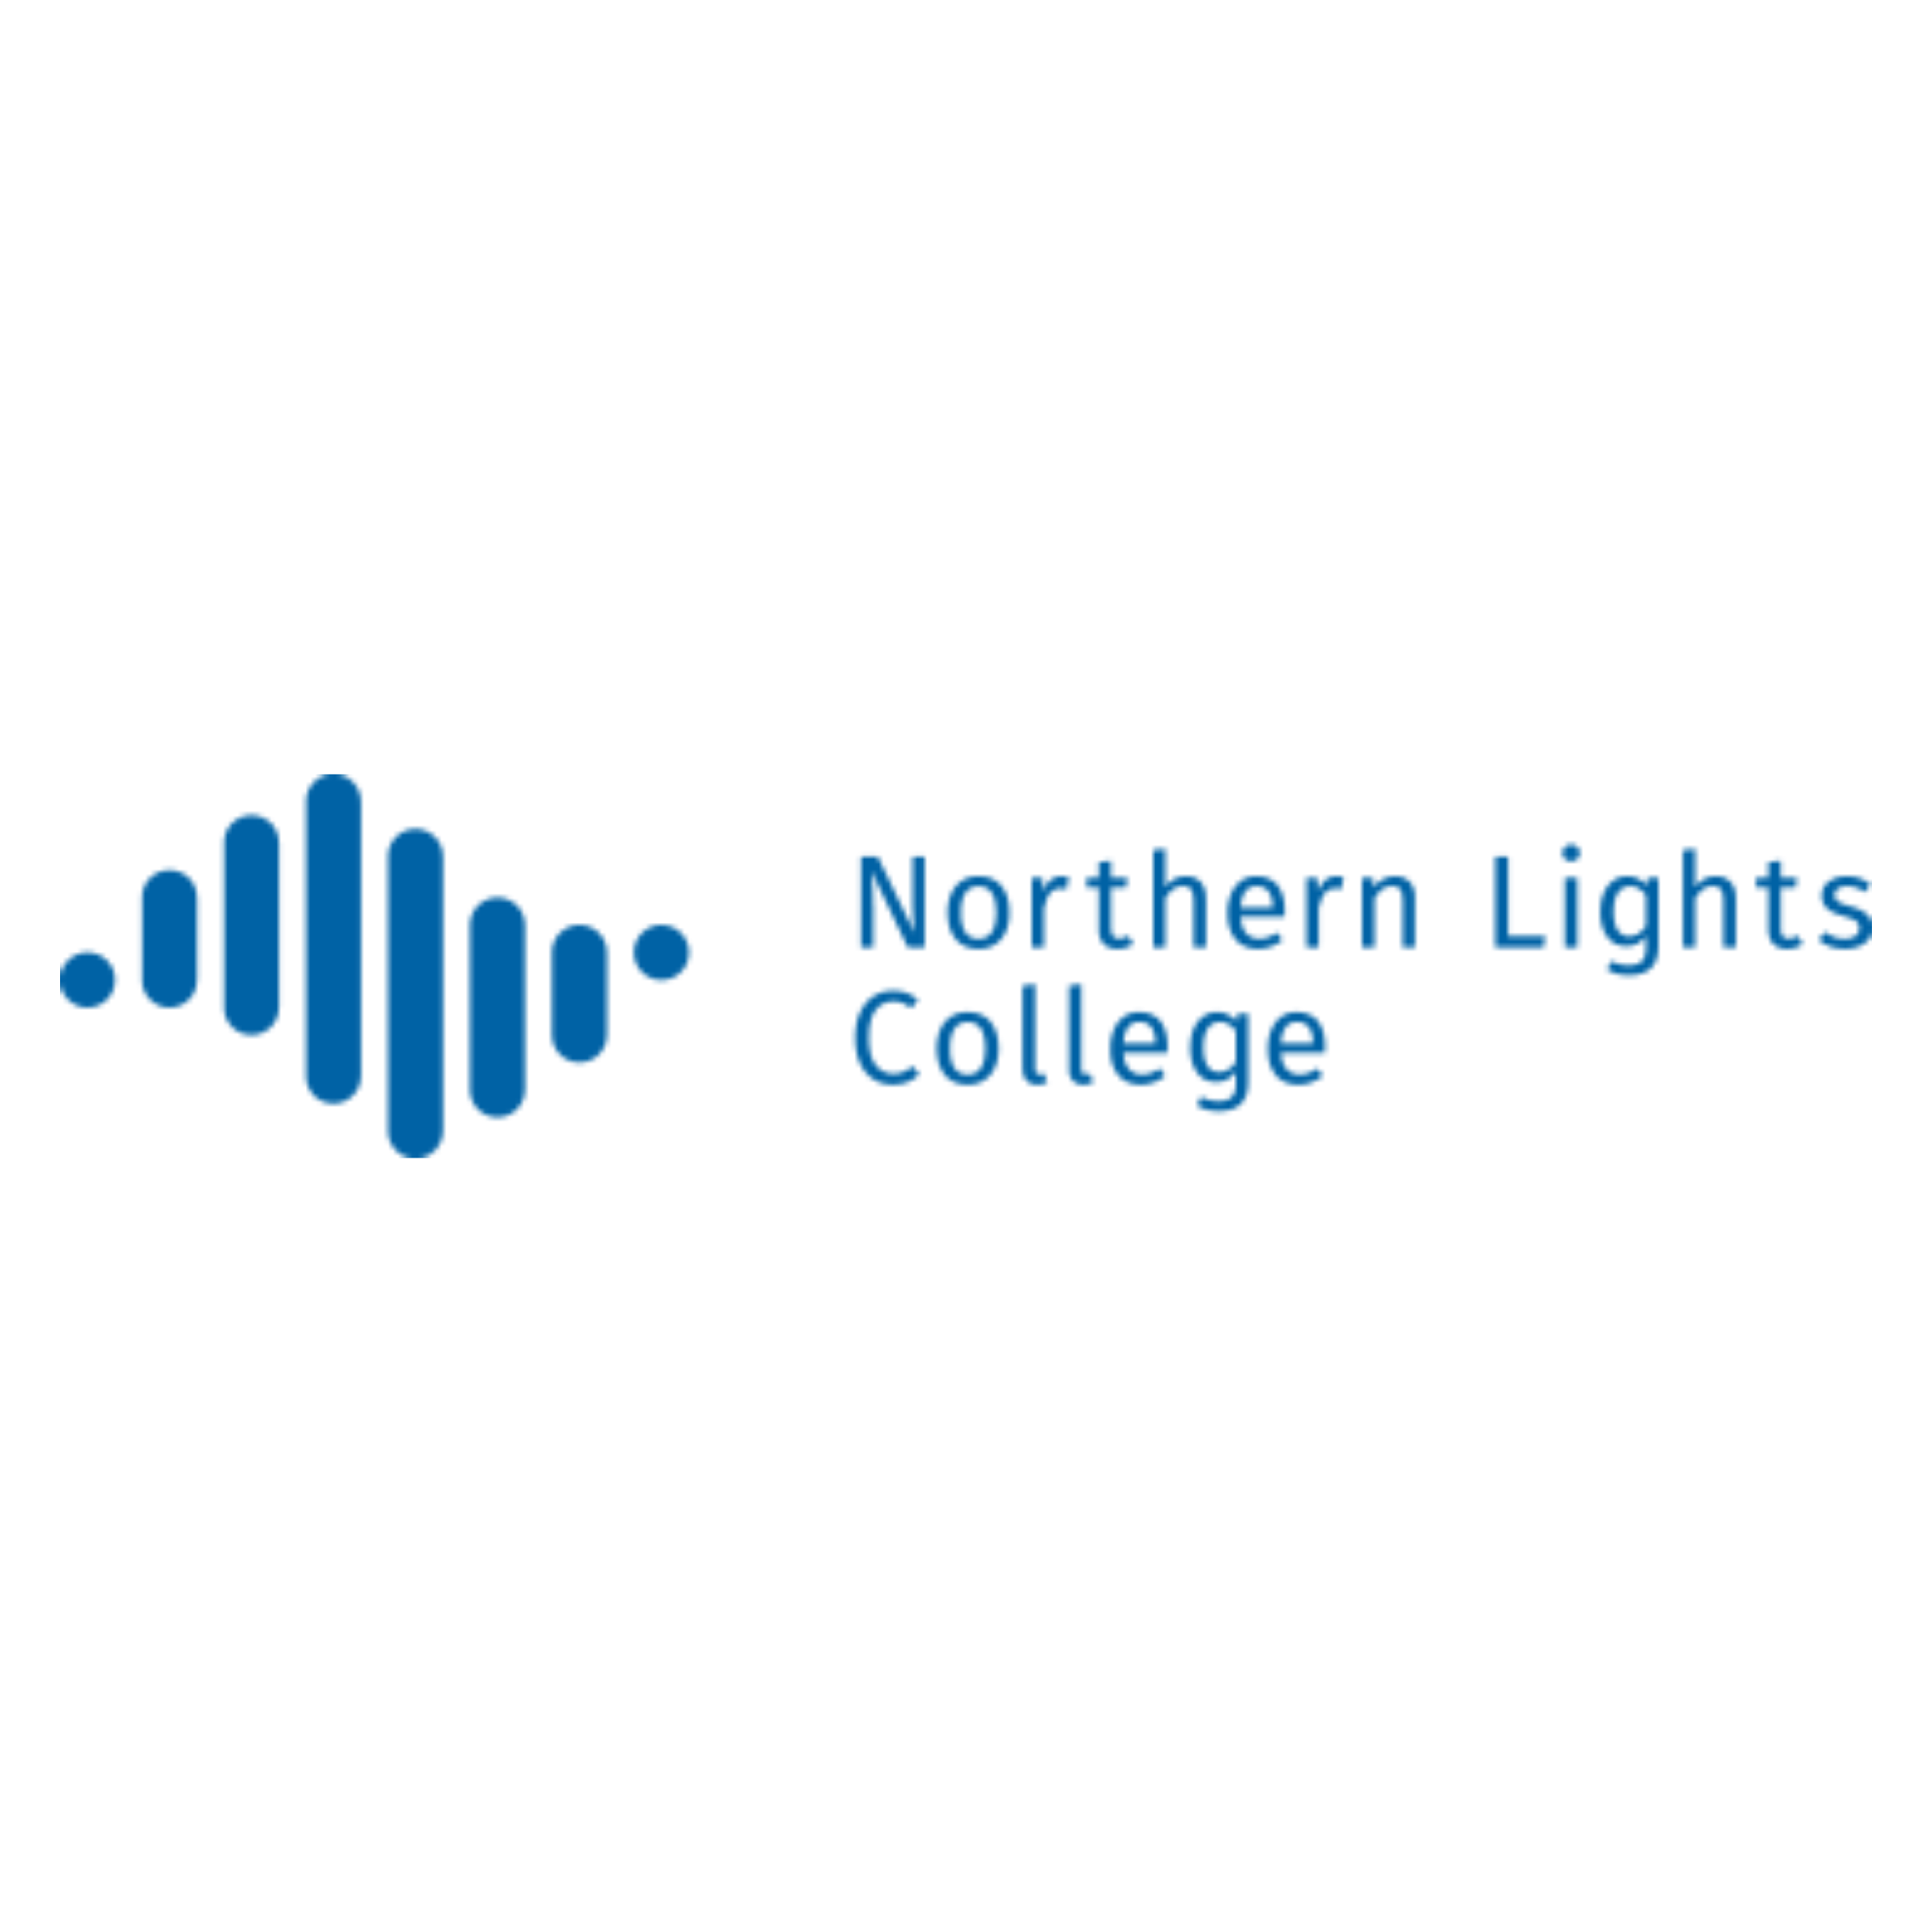 northern lights college